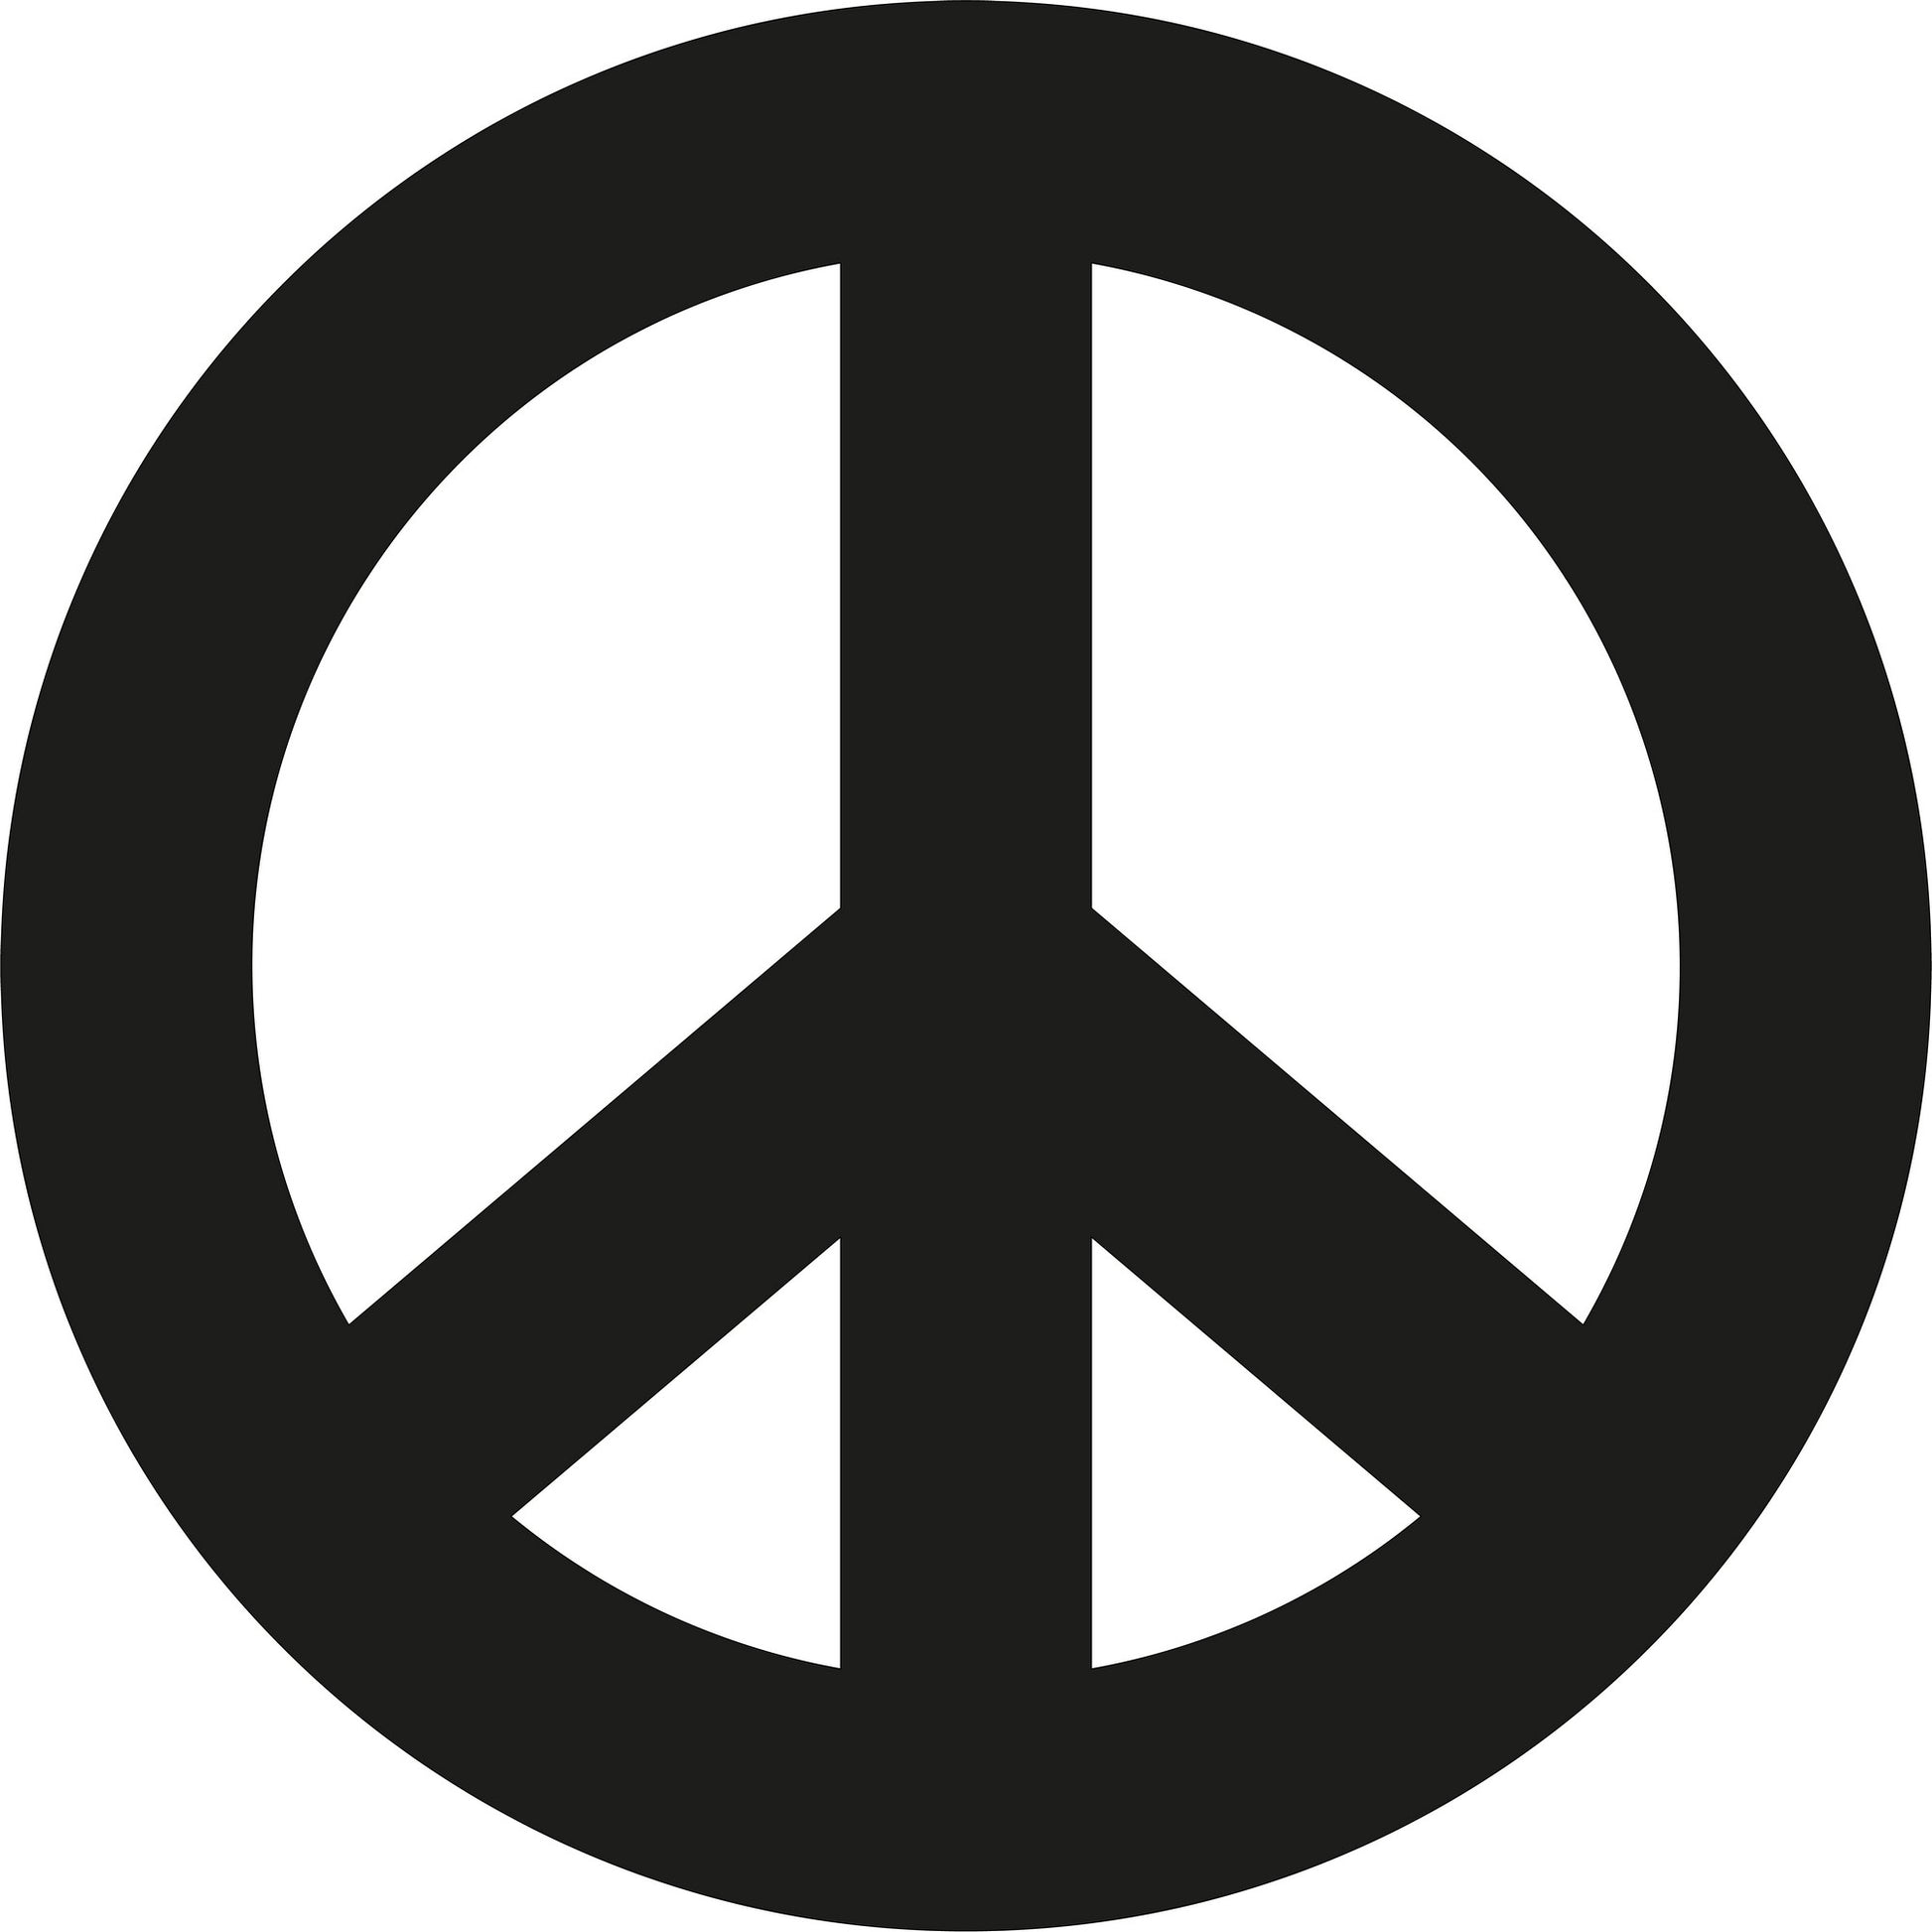 TAKK Peace - NordlyHome.dk